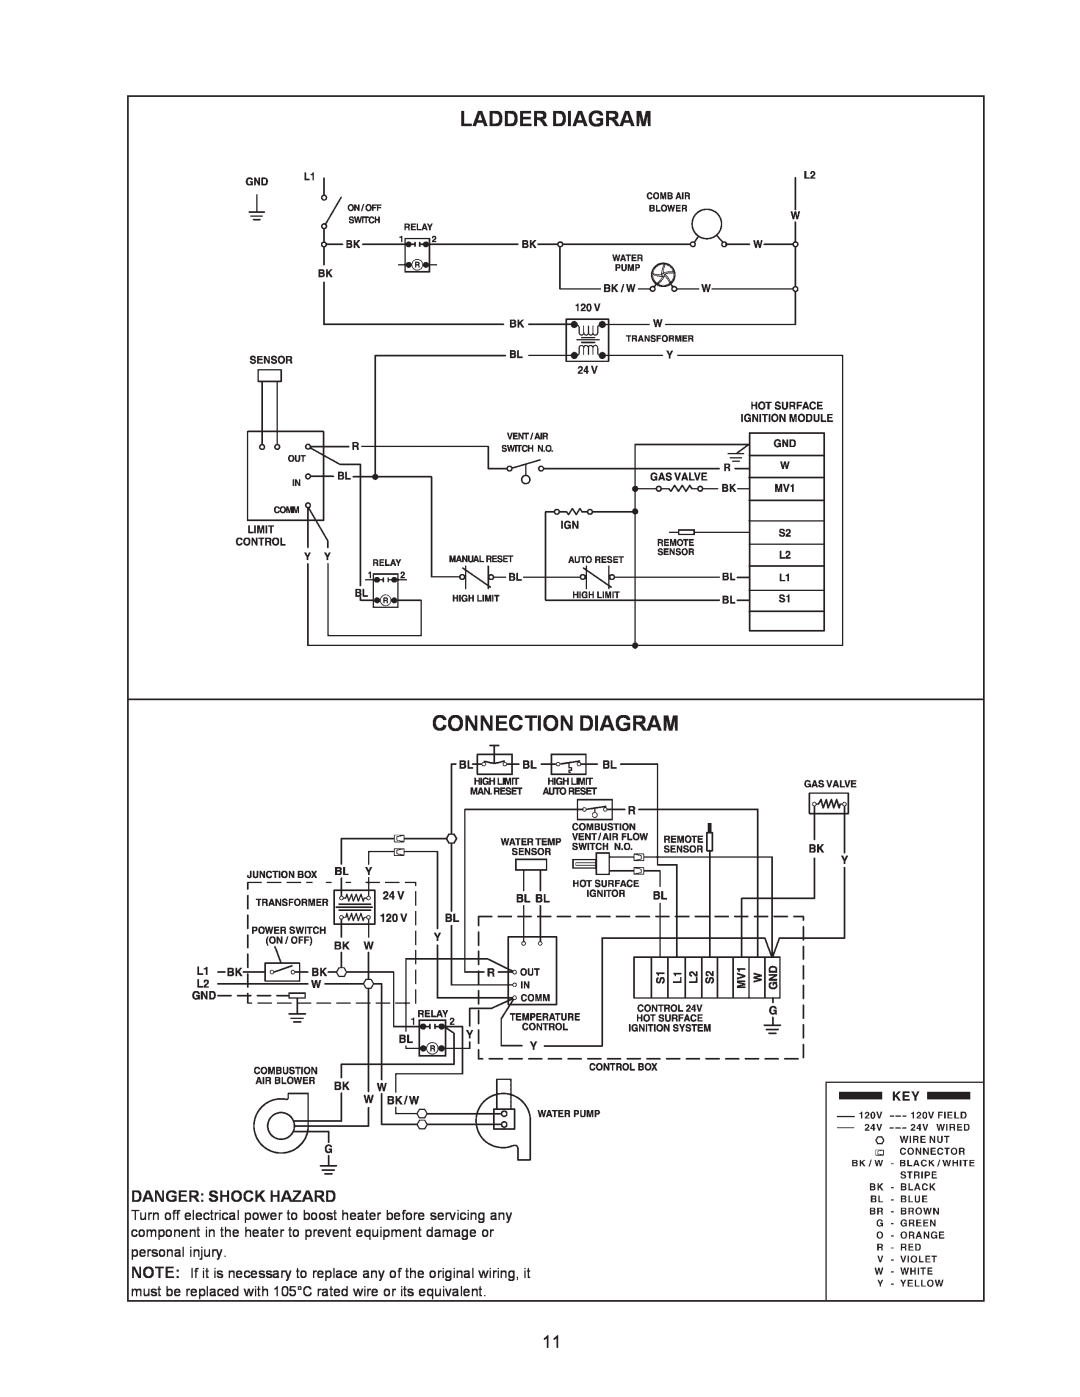 Raypak B-195 installation instructions Ladder Diagram Connection Diagram, Danger Shock Hazard, personal injury 